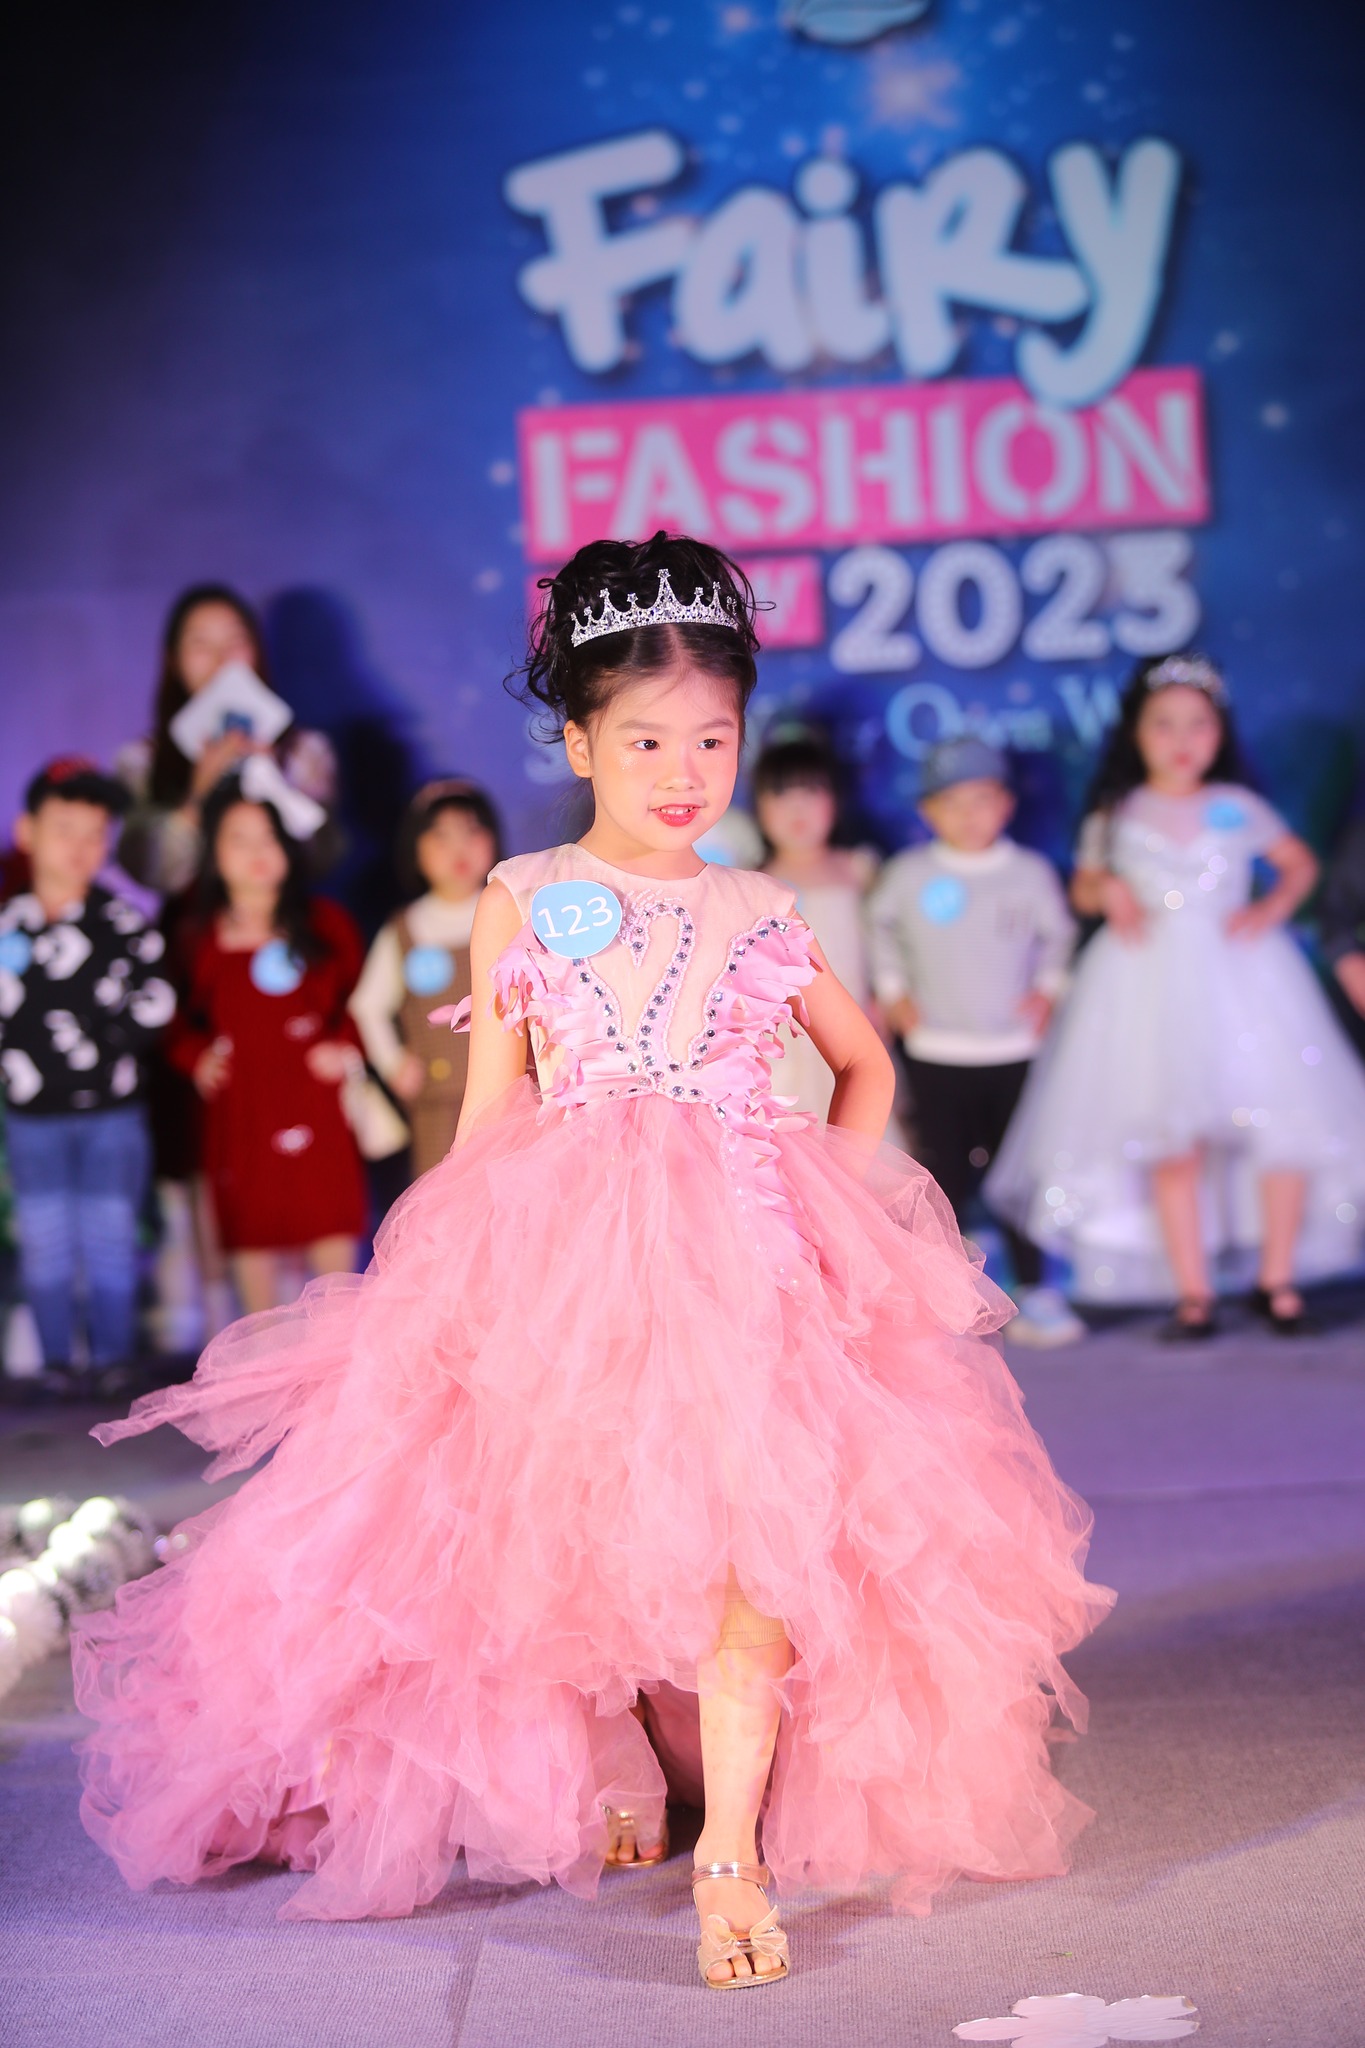 Fairy Fashion Show 2023 - Cơ sở Tam Trinh